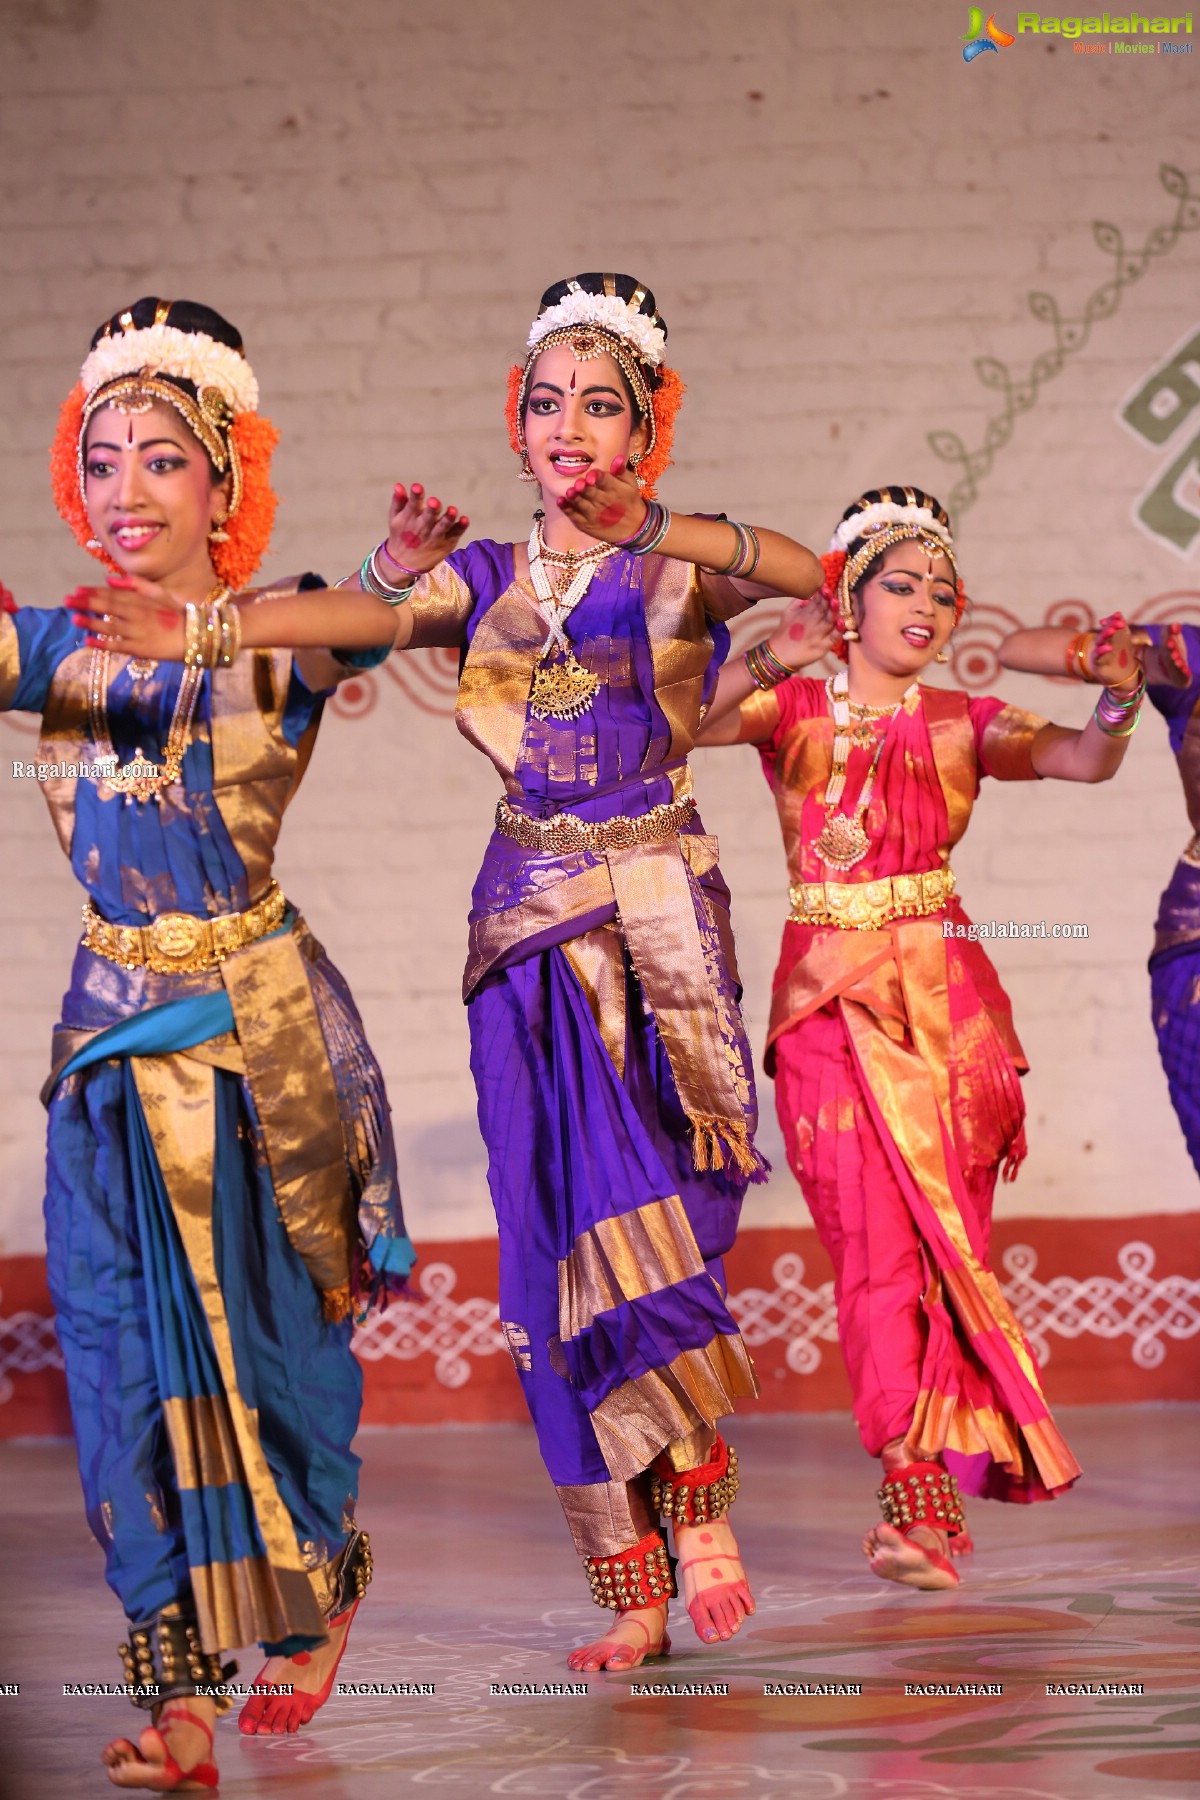 Chinmayi Nrityalaya Students' Kuchipudi Dance Performance at Shiplaramam 